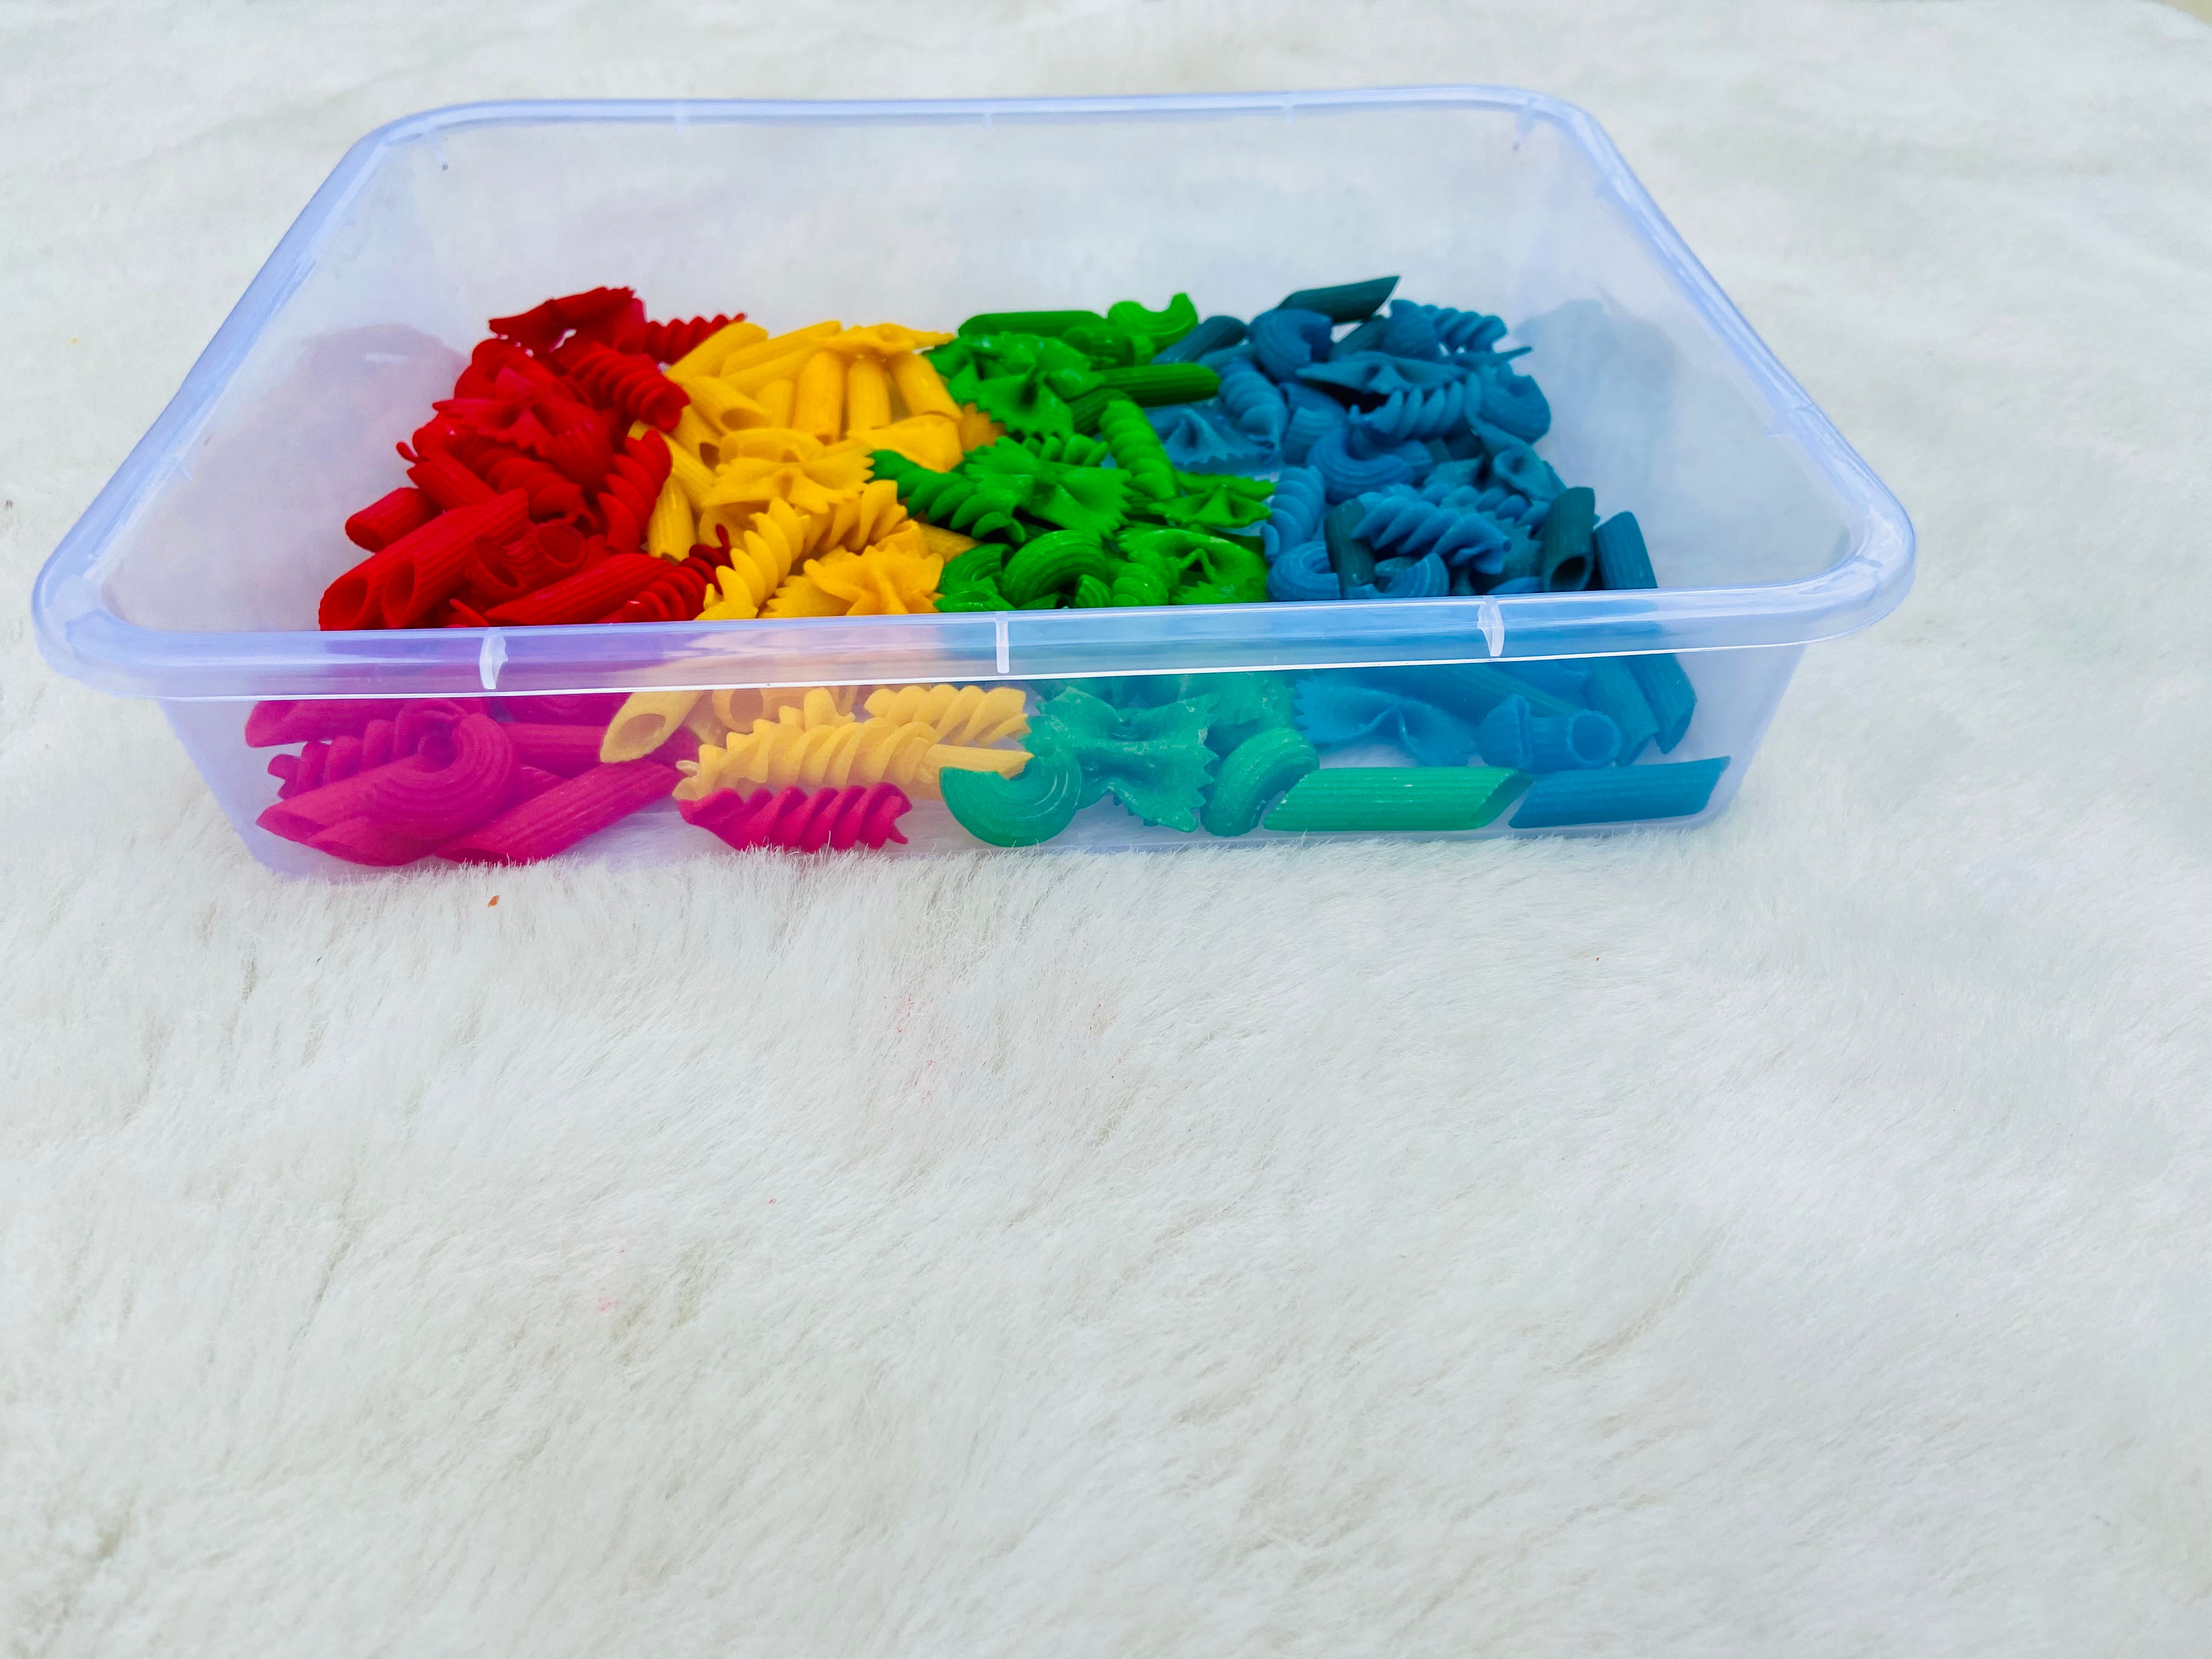 Sensory Bin Tray | Transparent Food grade Plastic Play Tray | Kids activities